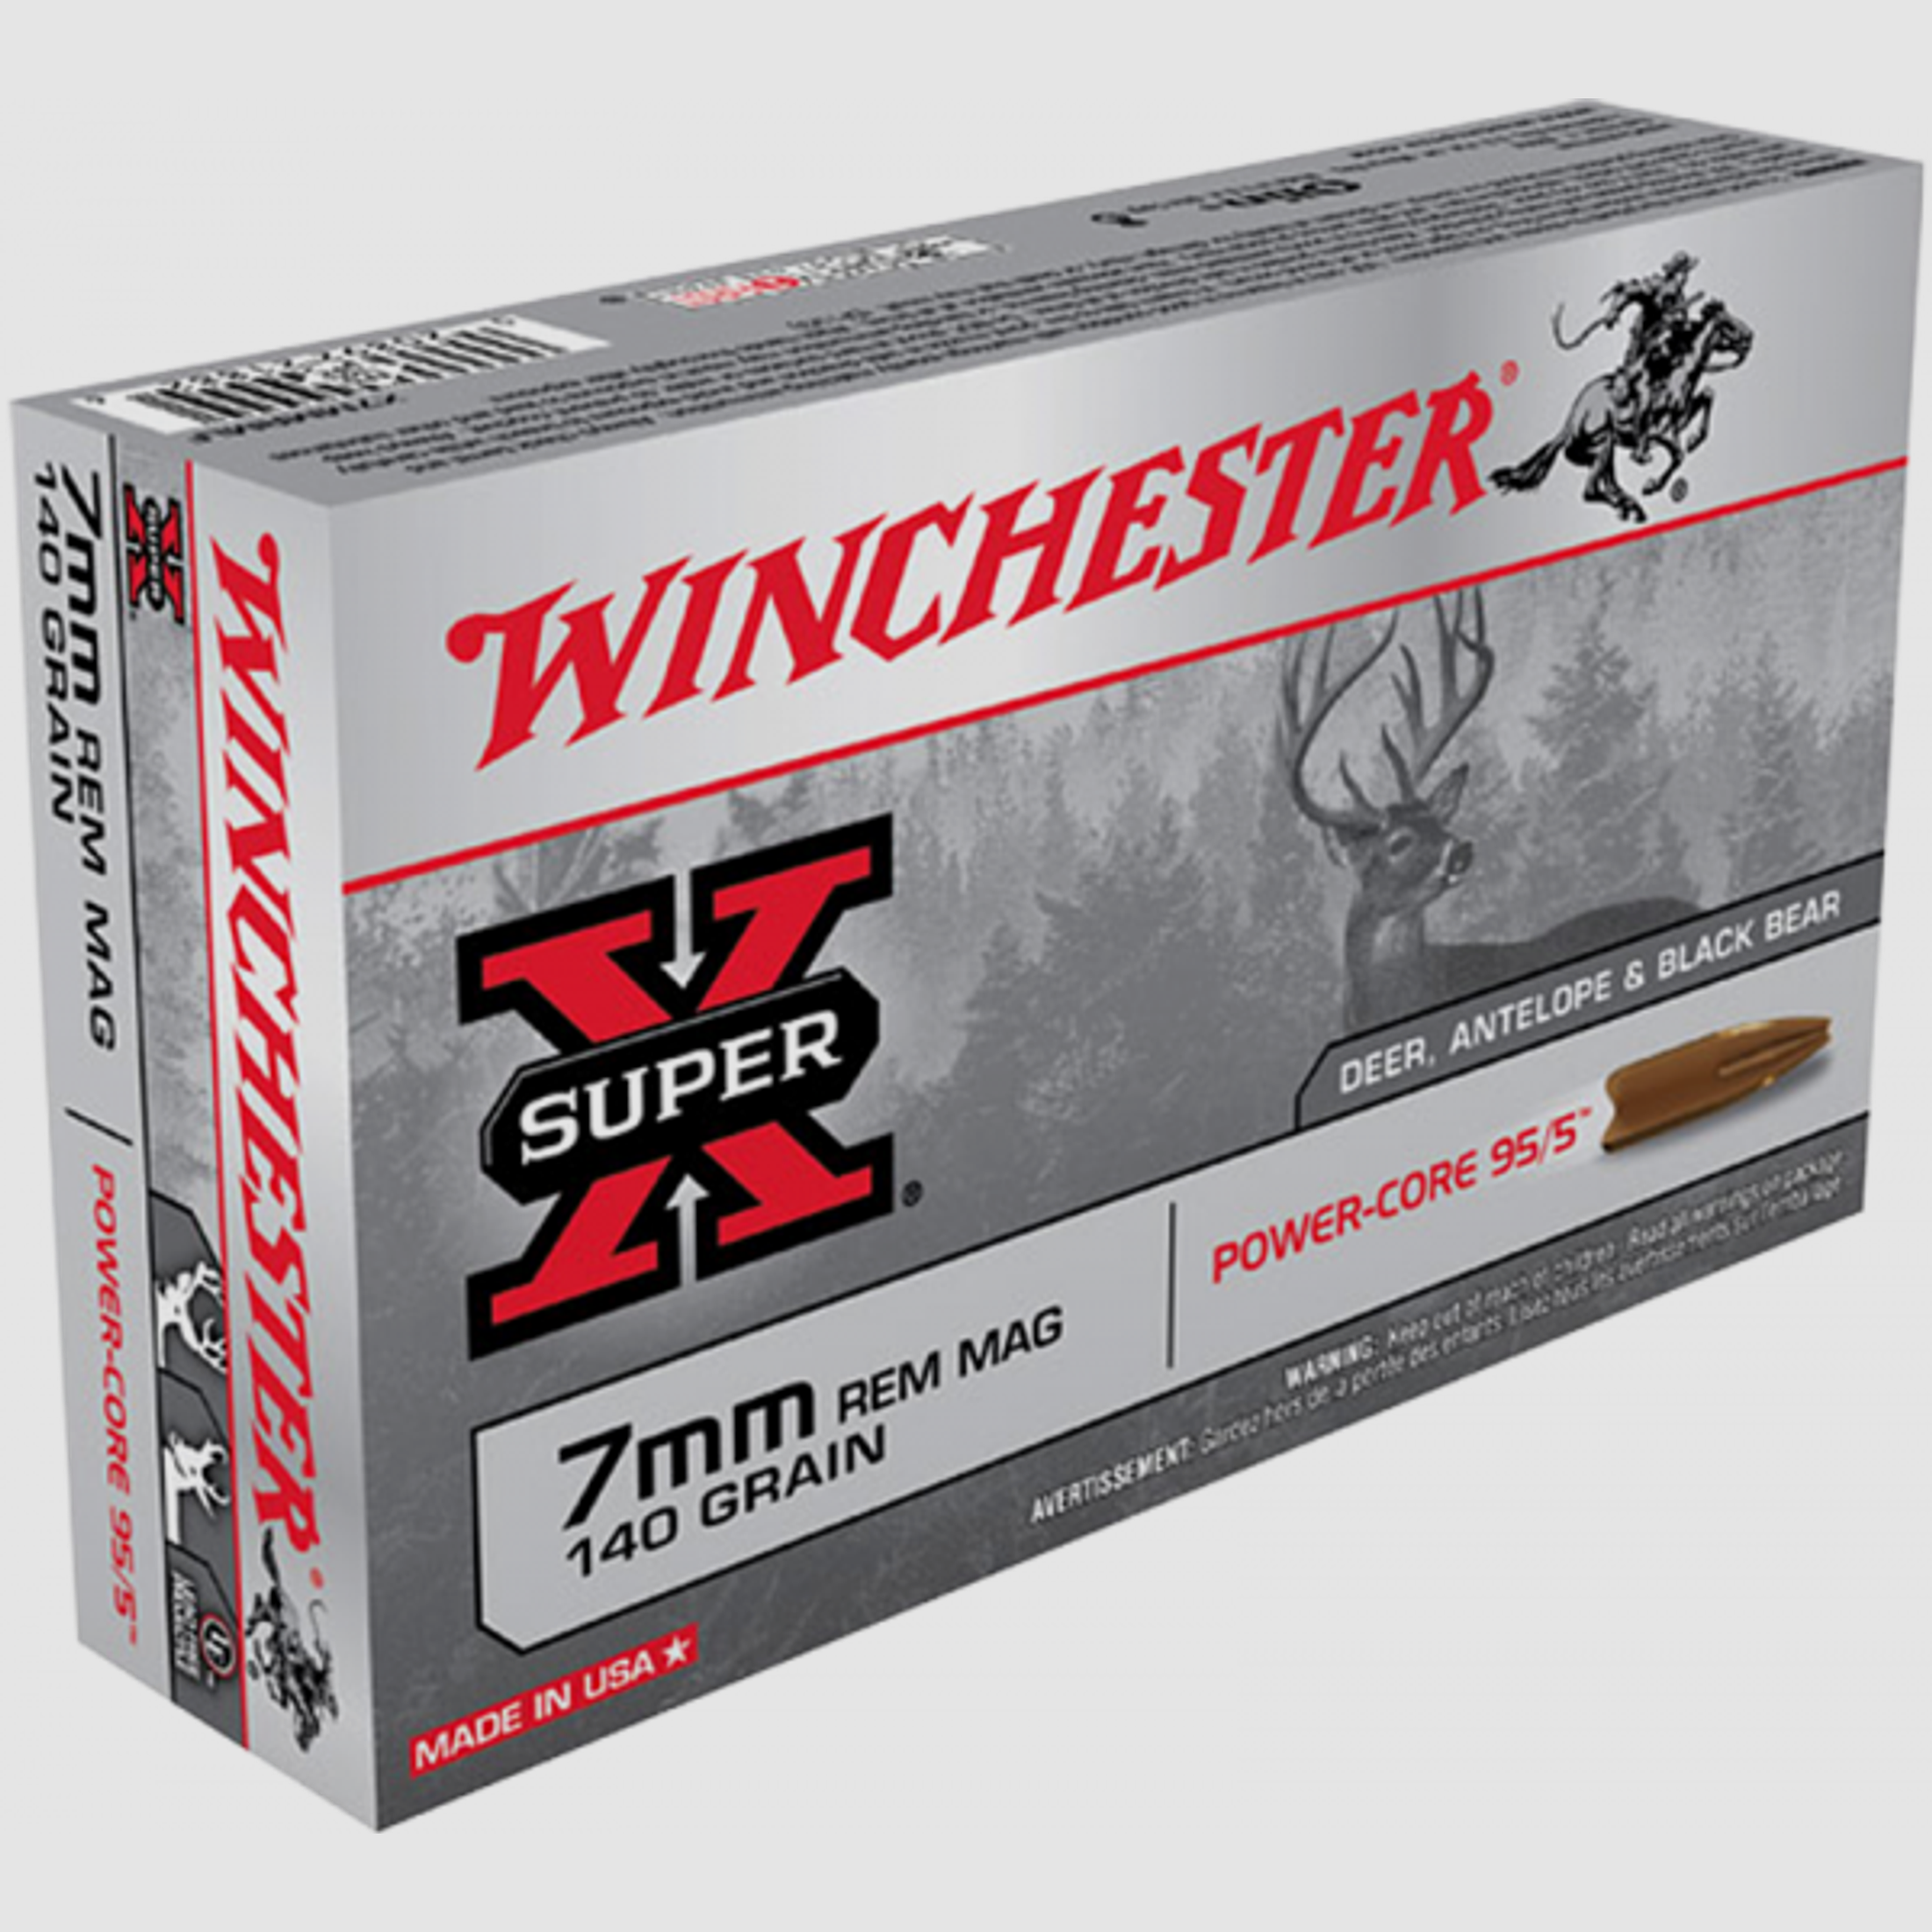 Büchsenpatronen Winchester Super X 7mm Rem. Mag. Power Core 95/5 140gr. Bleifrei !!!